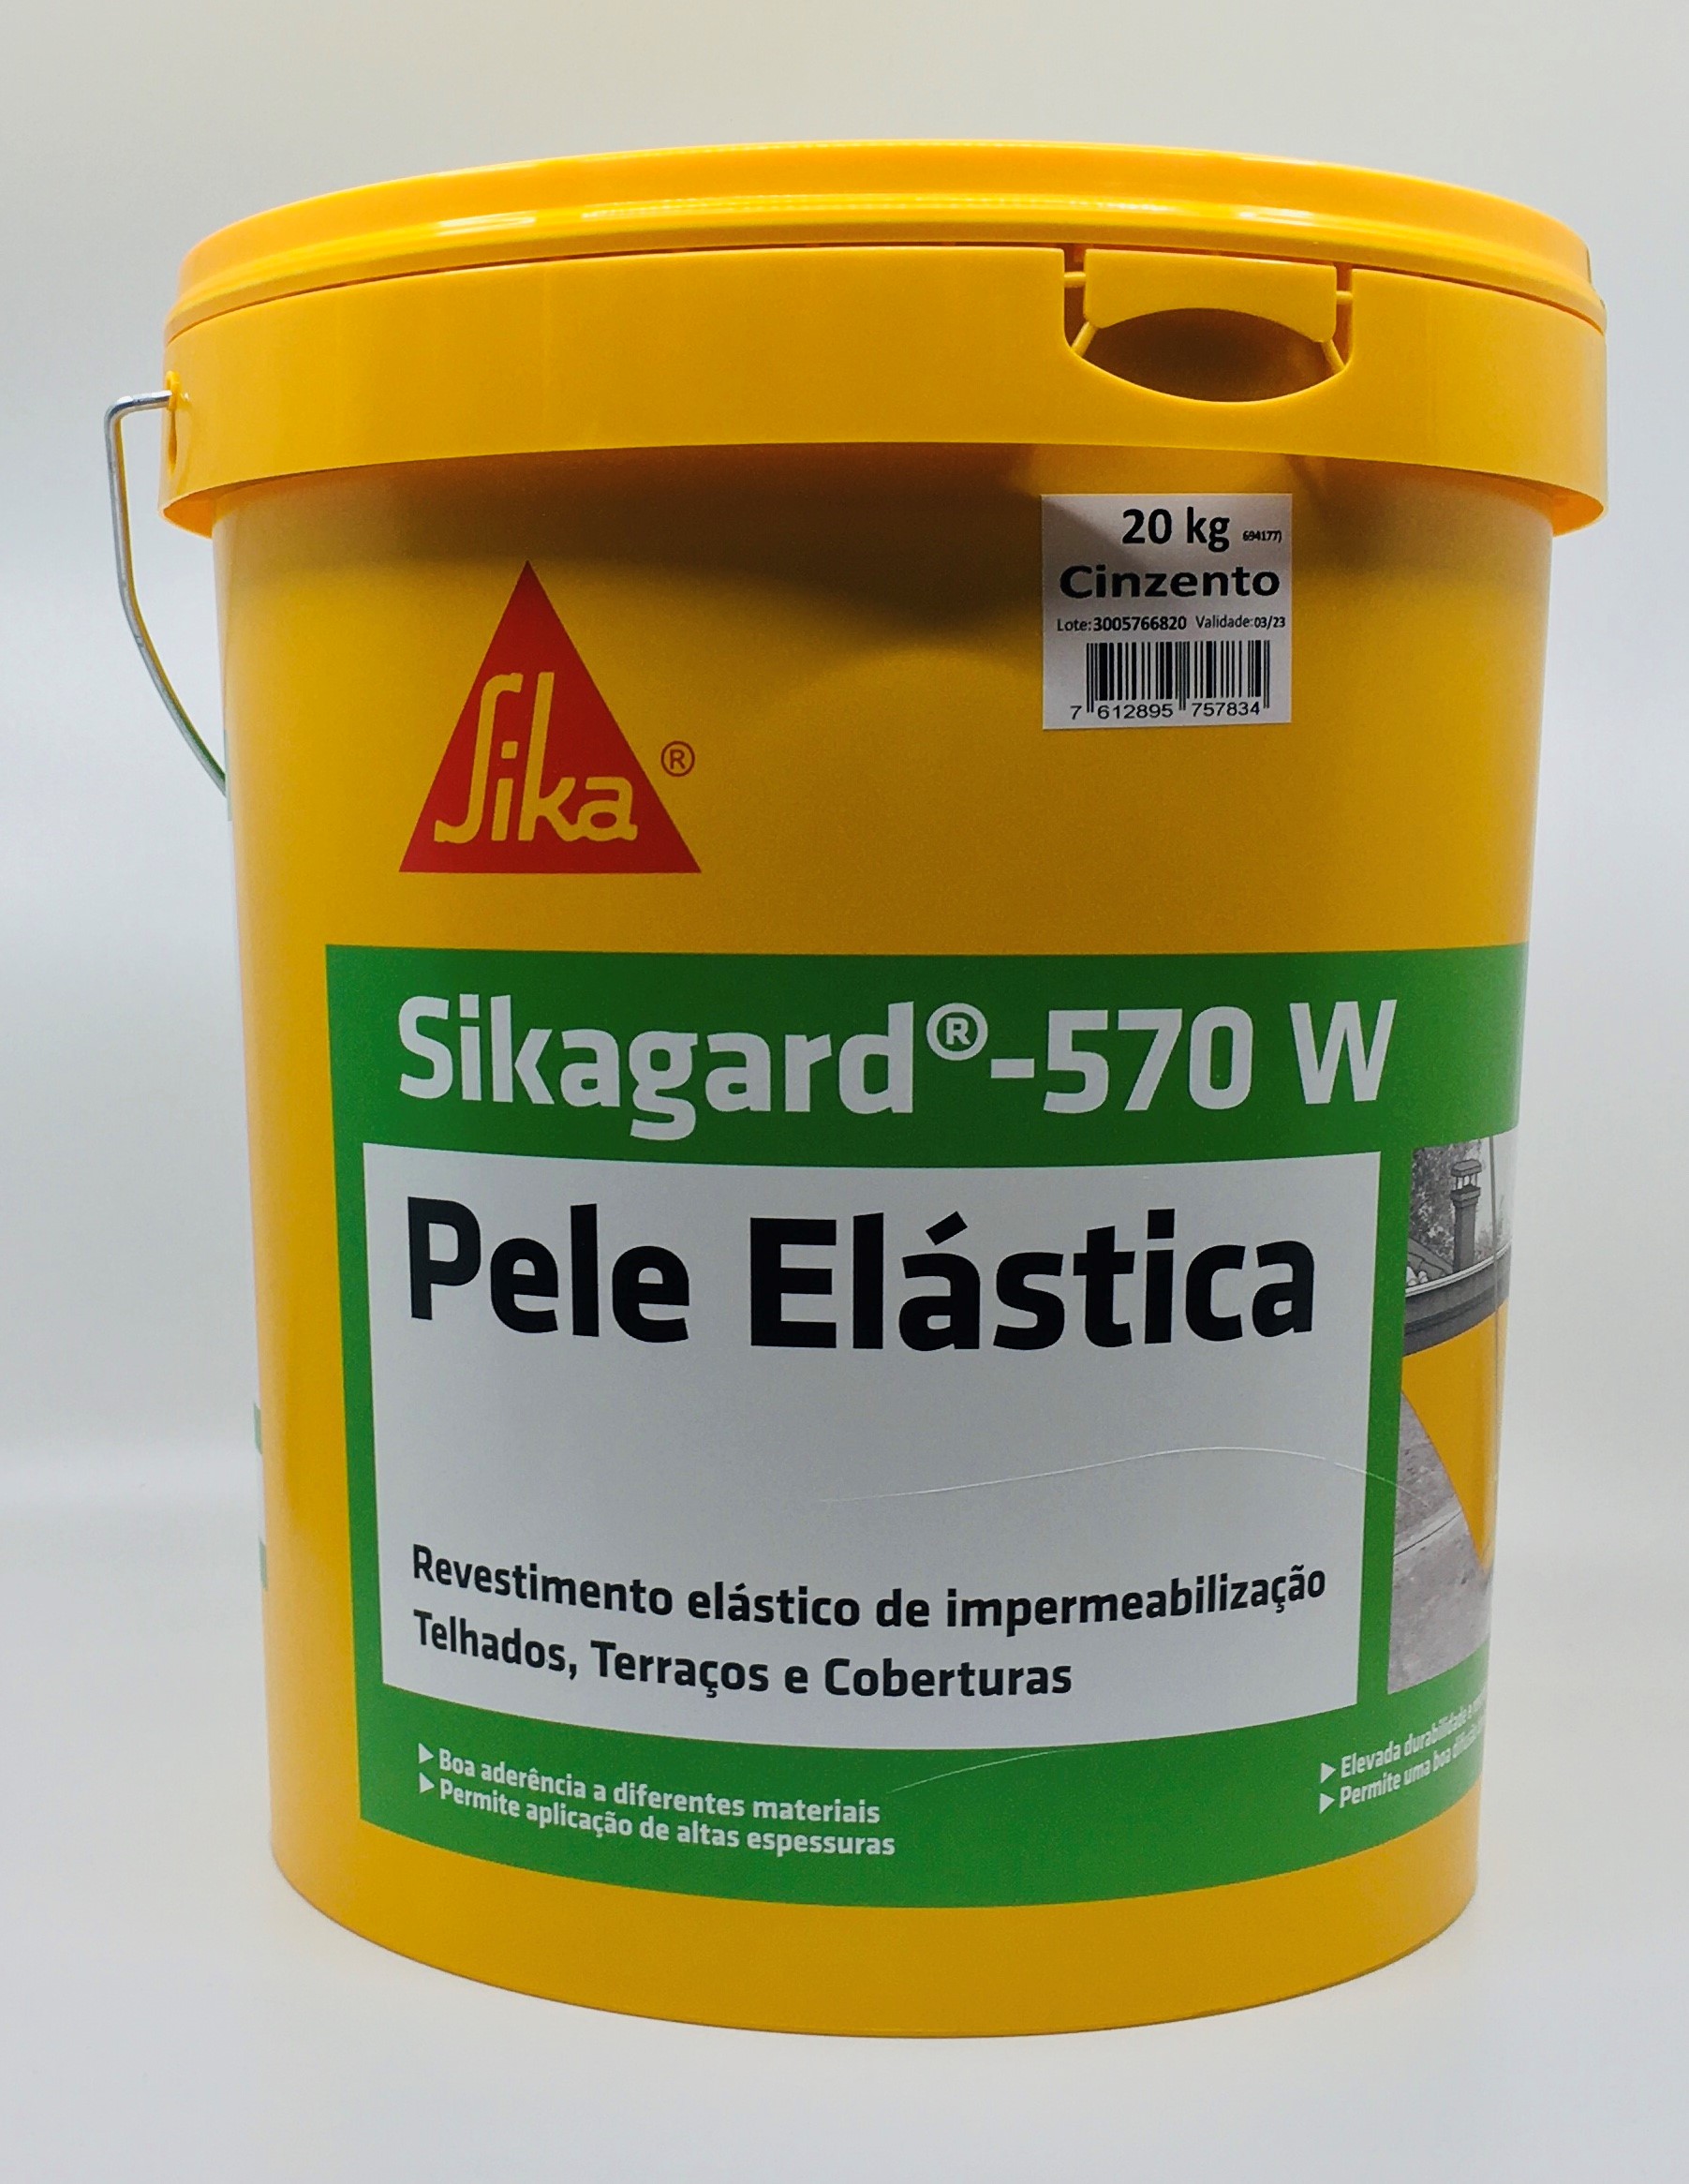 Sikagard 570W Pele Elástica